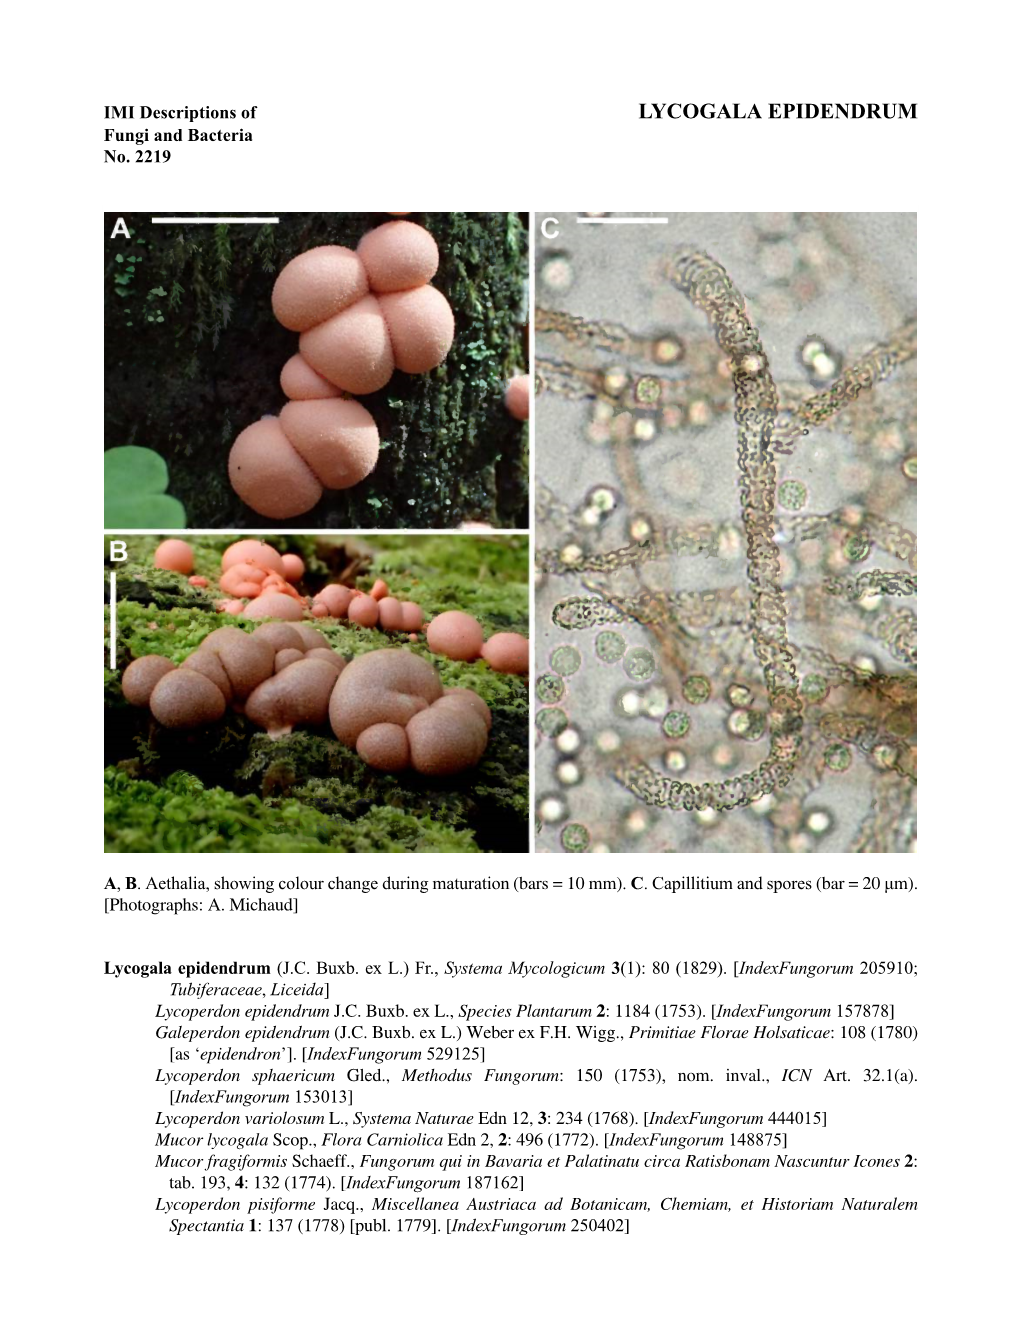 LYCOGALA EPIDENDRUM Fungi and Bacteria No